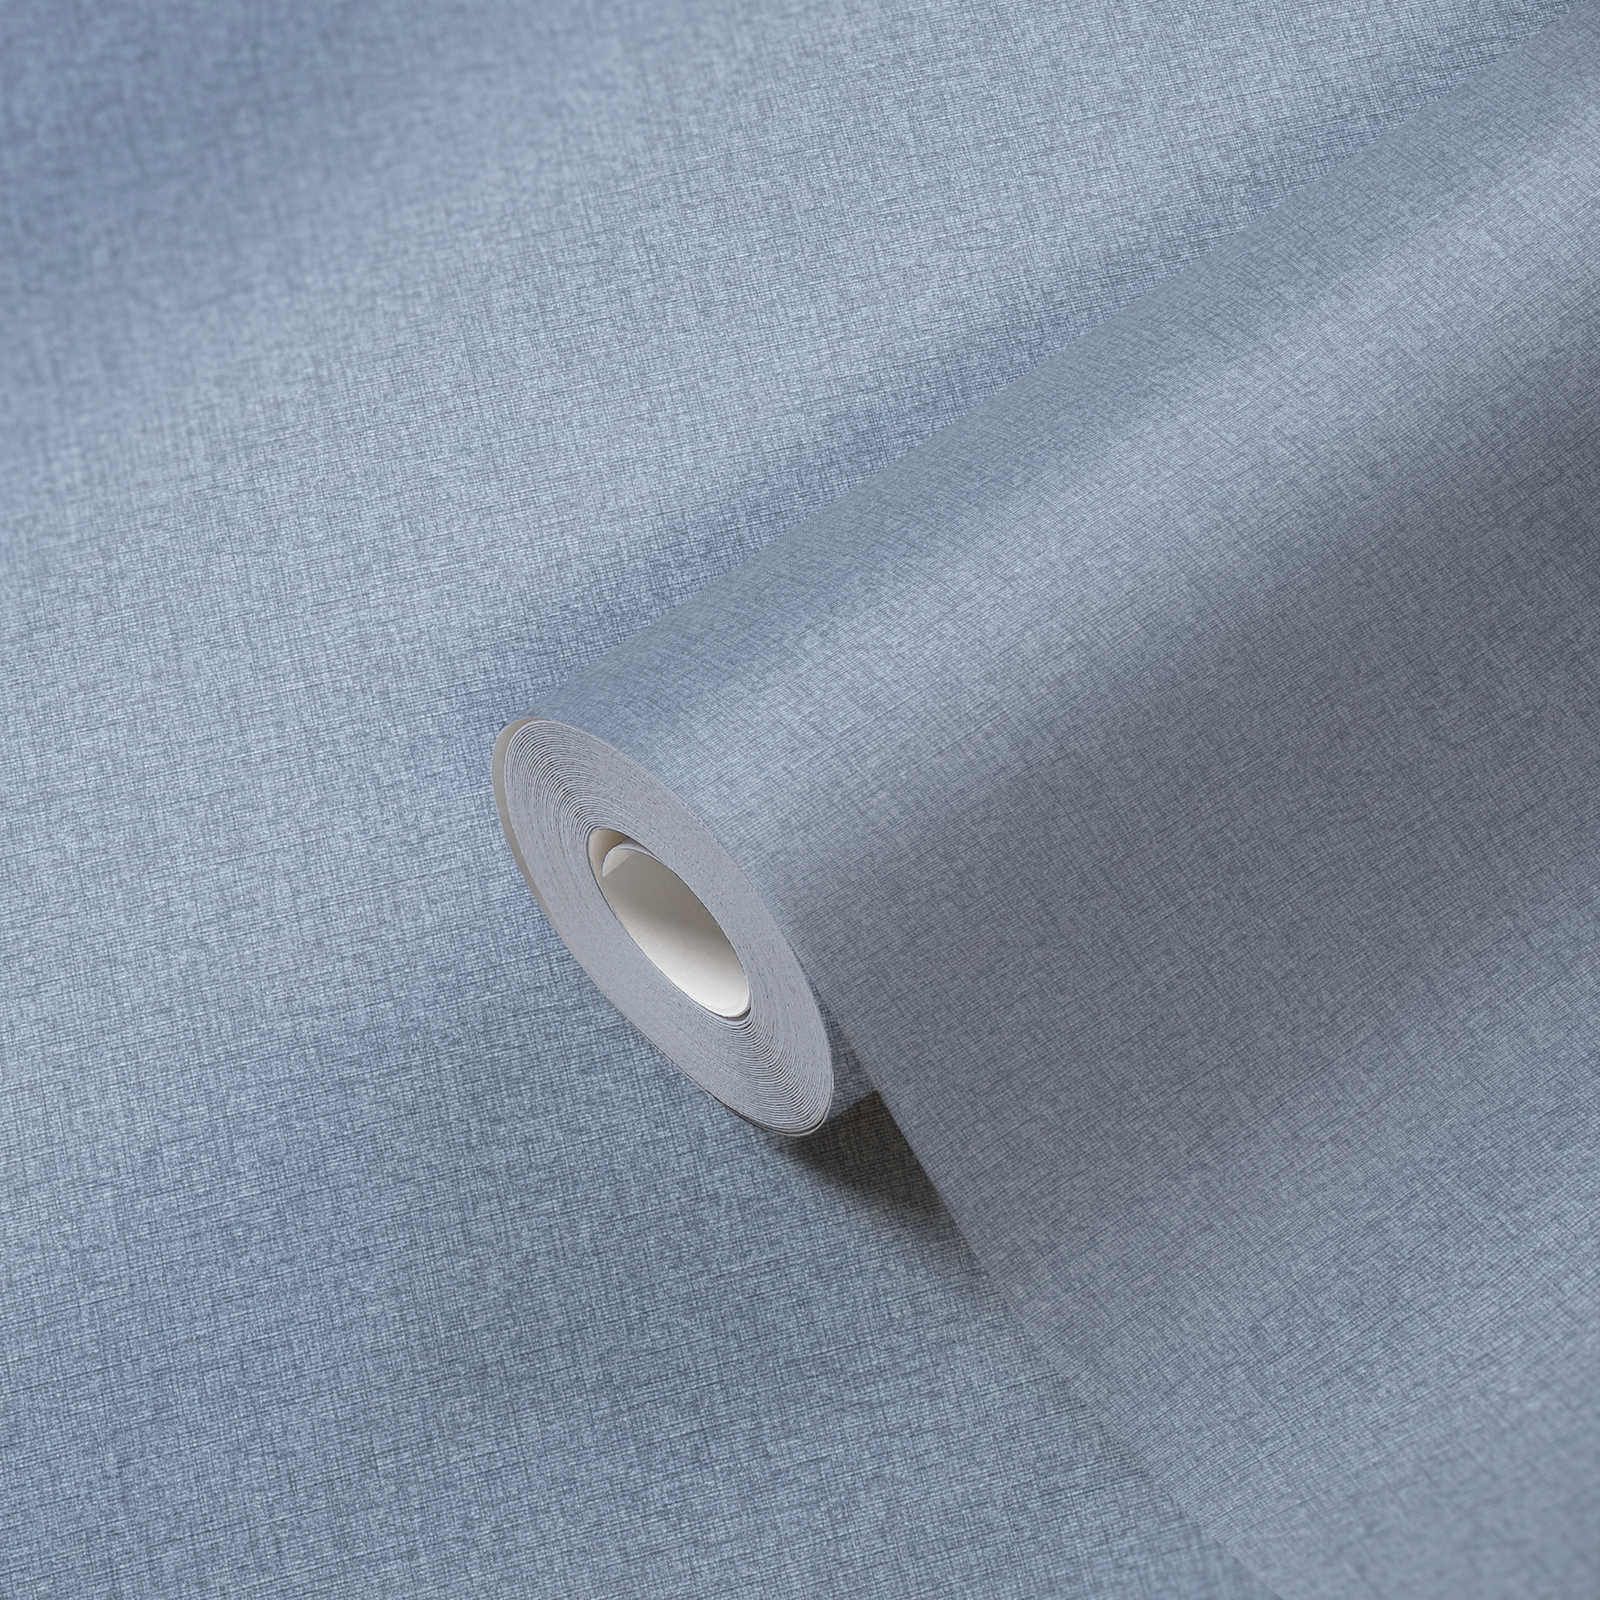             Plain non-woven wallpaper in textile look with light structure, matt - blue
        